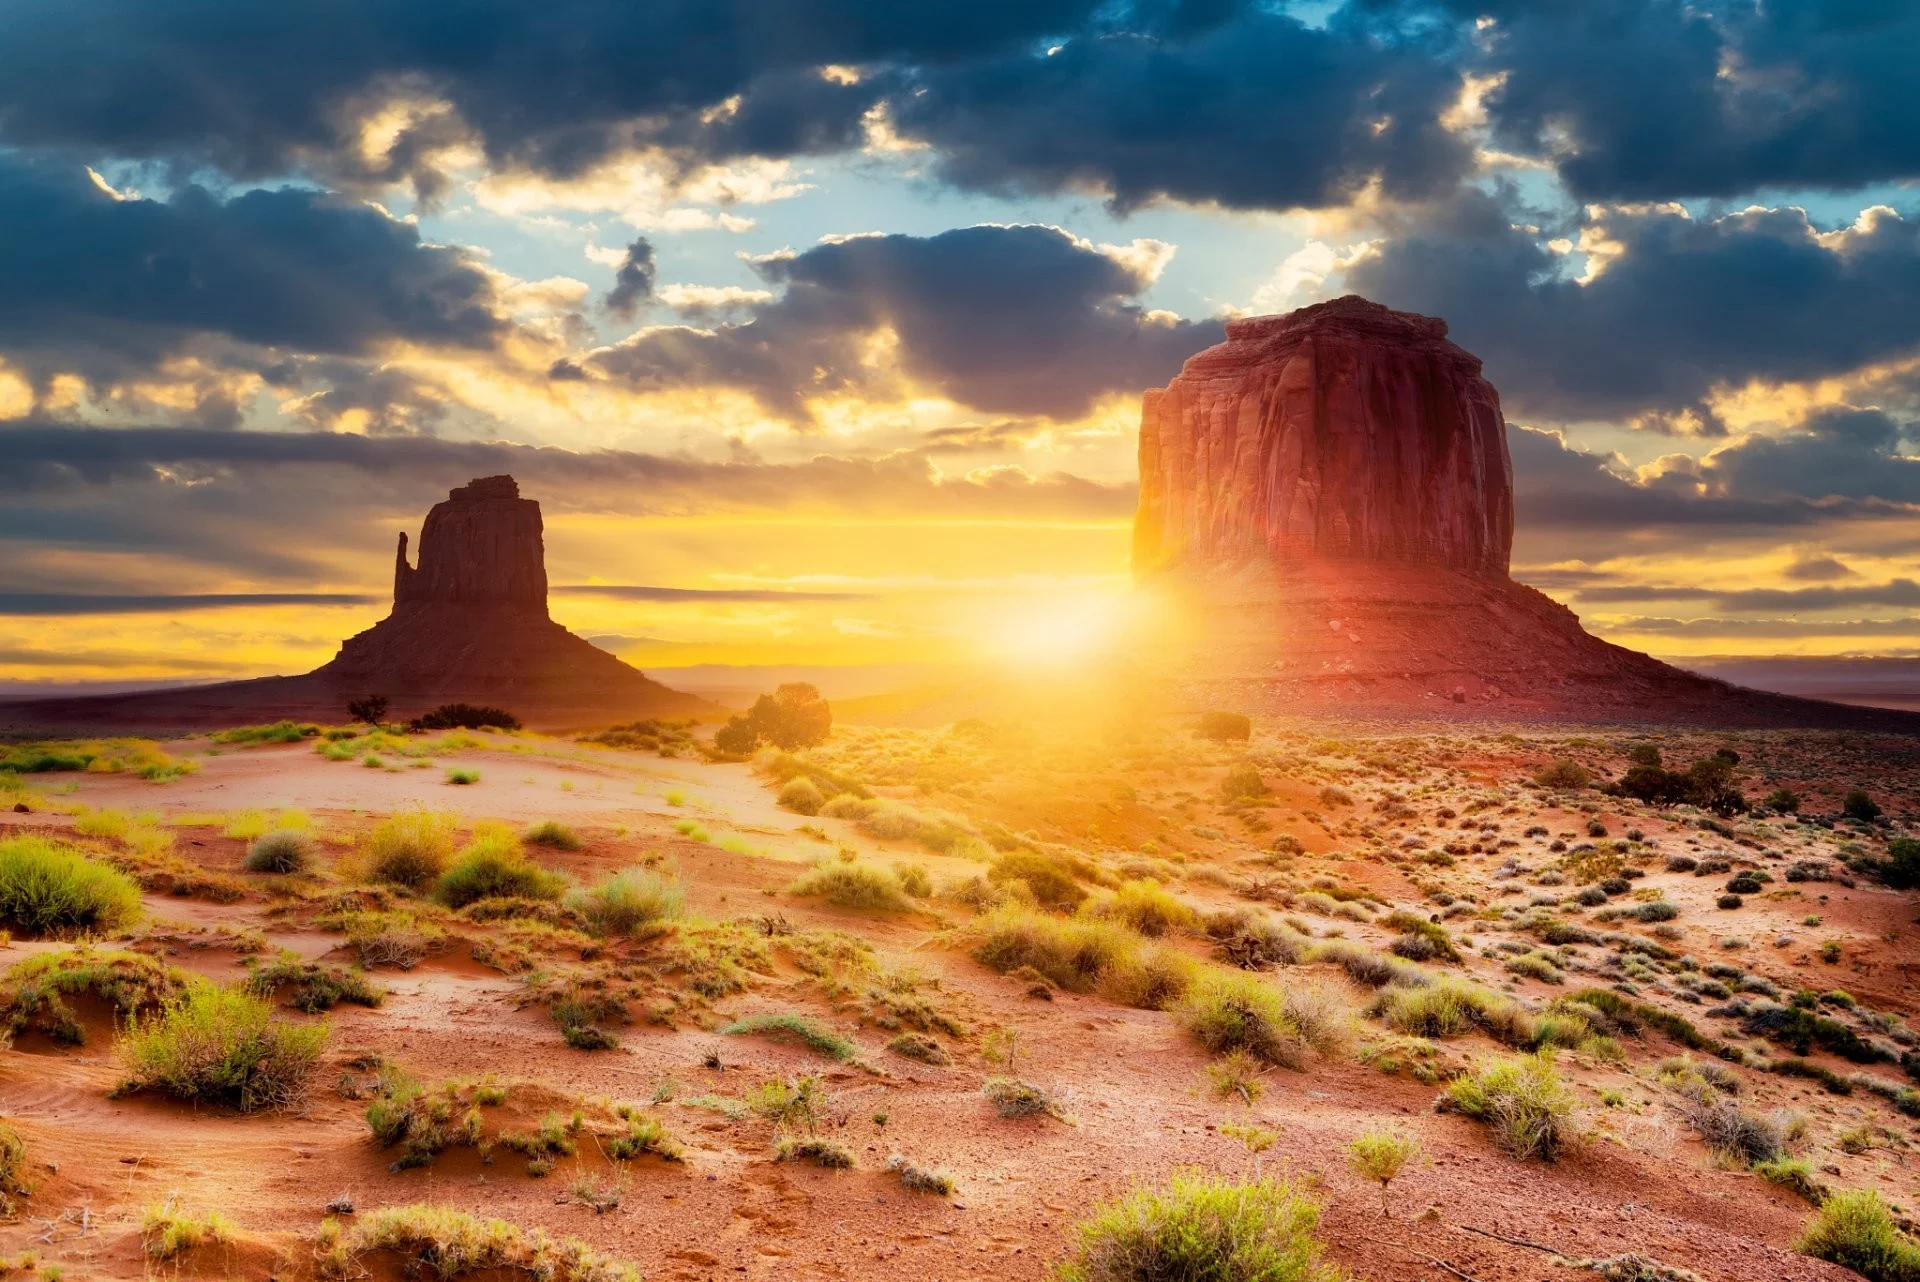 United states arizona utah monument valley geological formation desert sun light